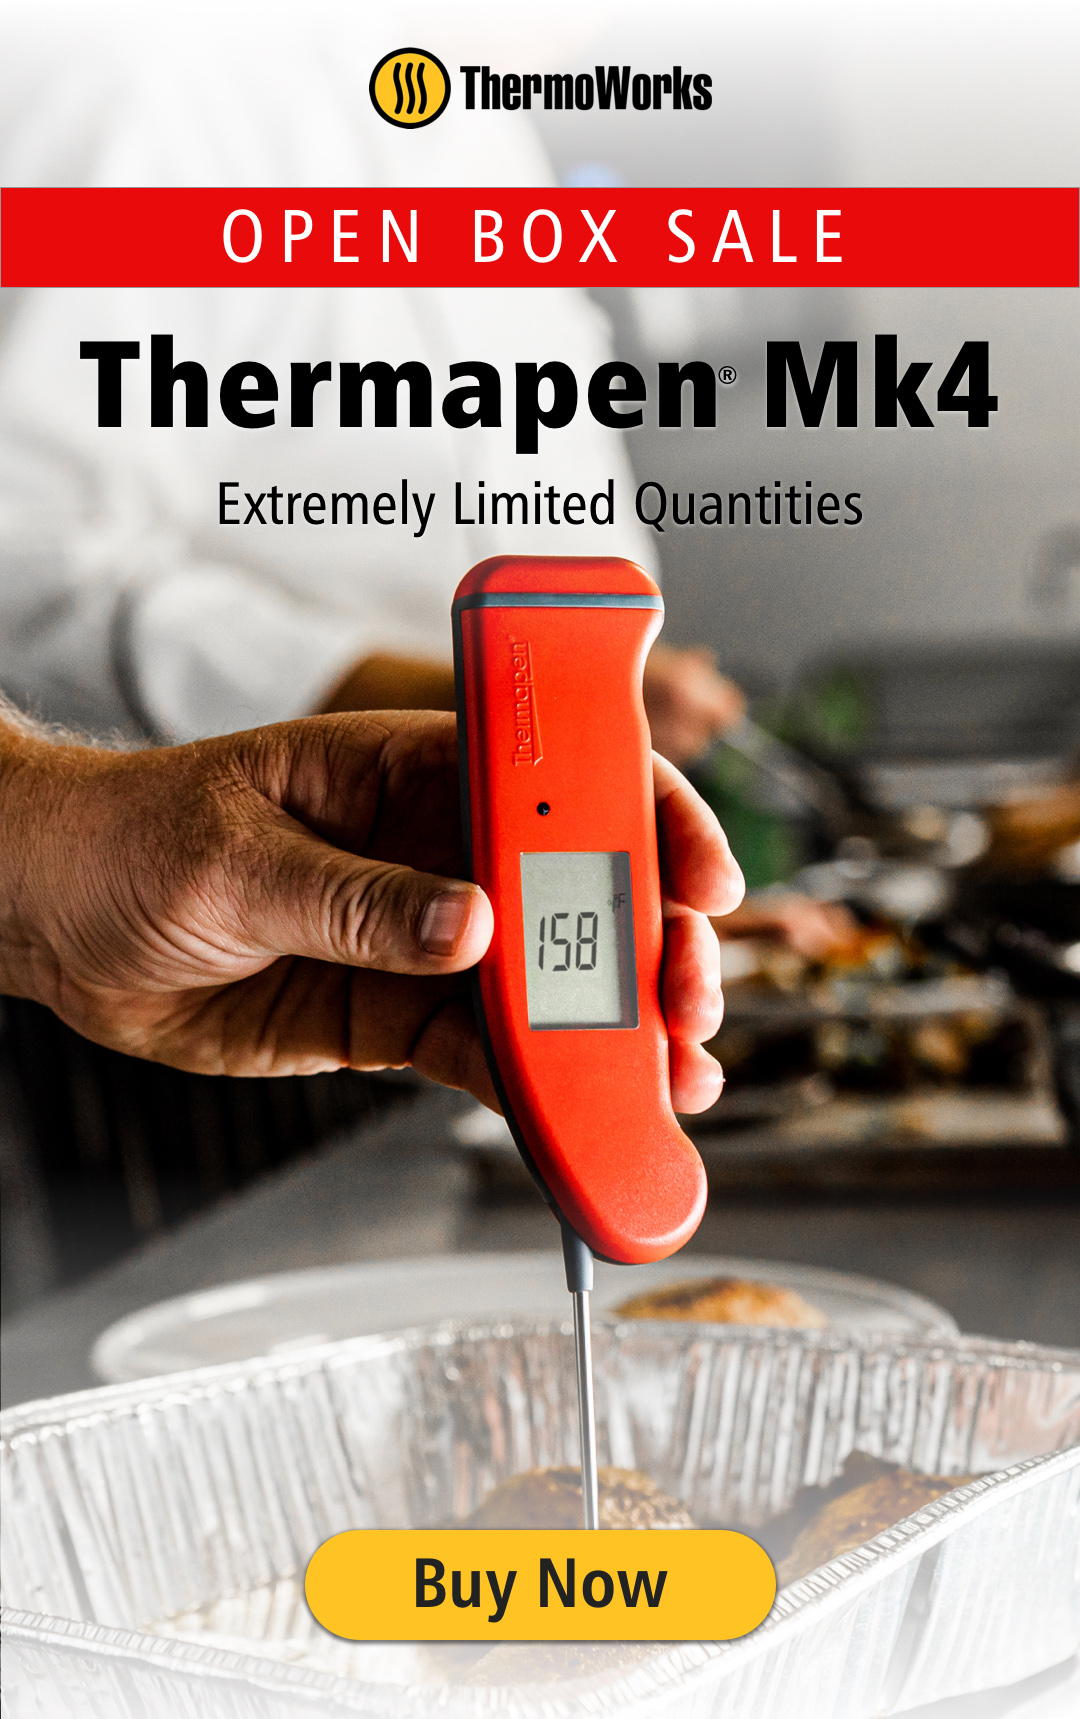 Thermapen Mk4 in Seafoam, Limited Edition, $84.15